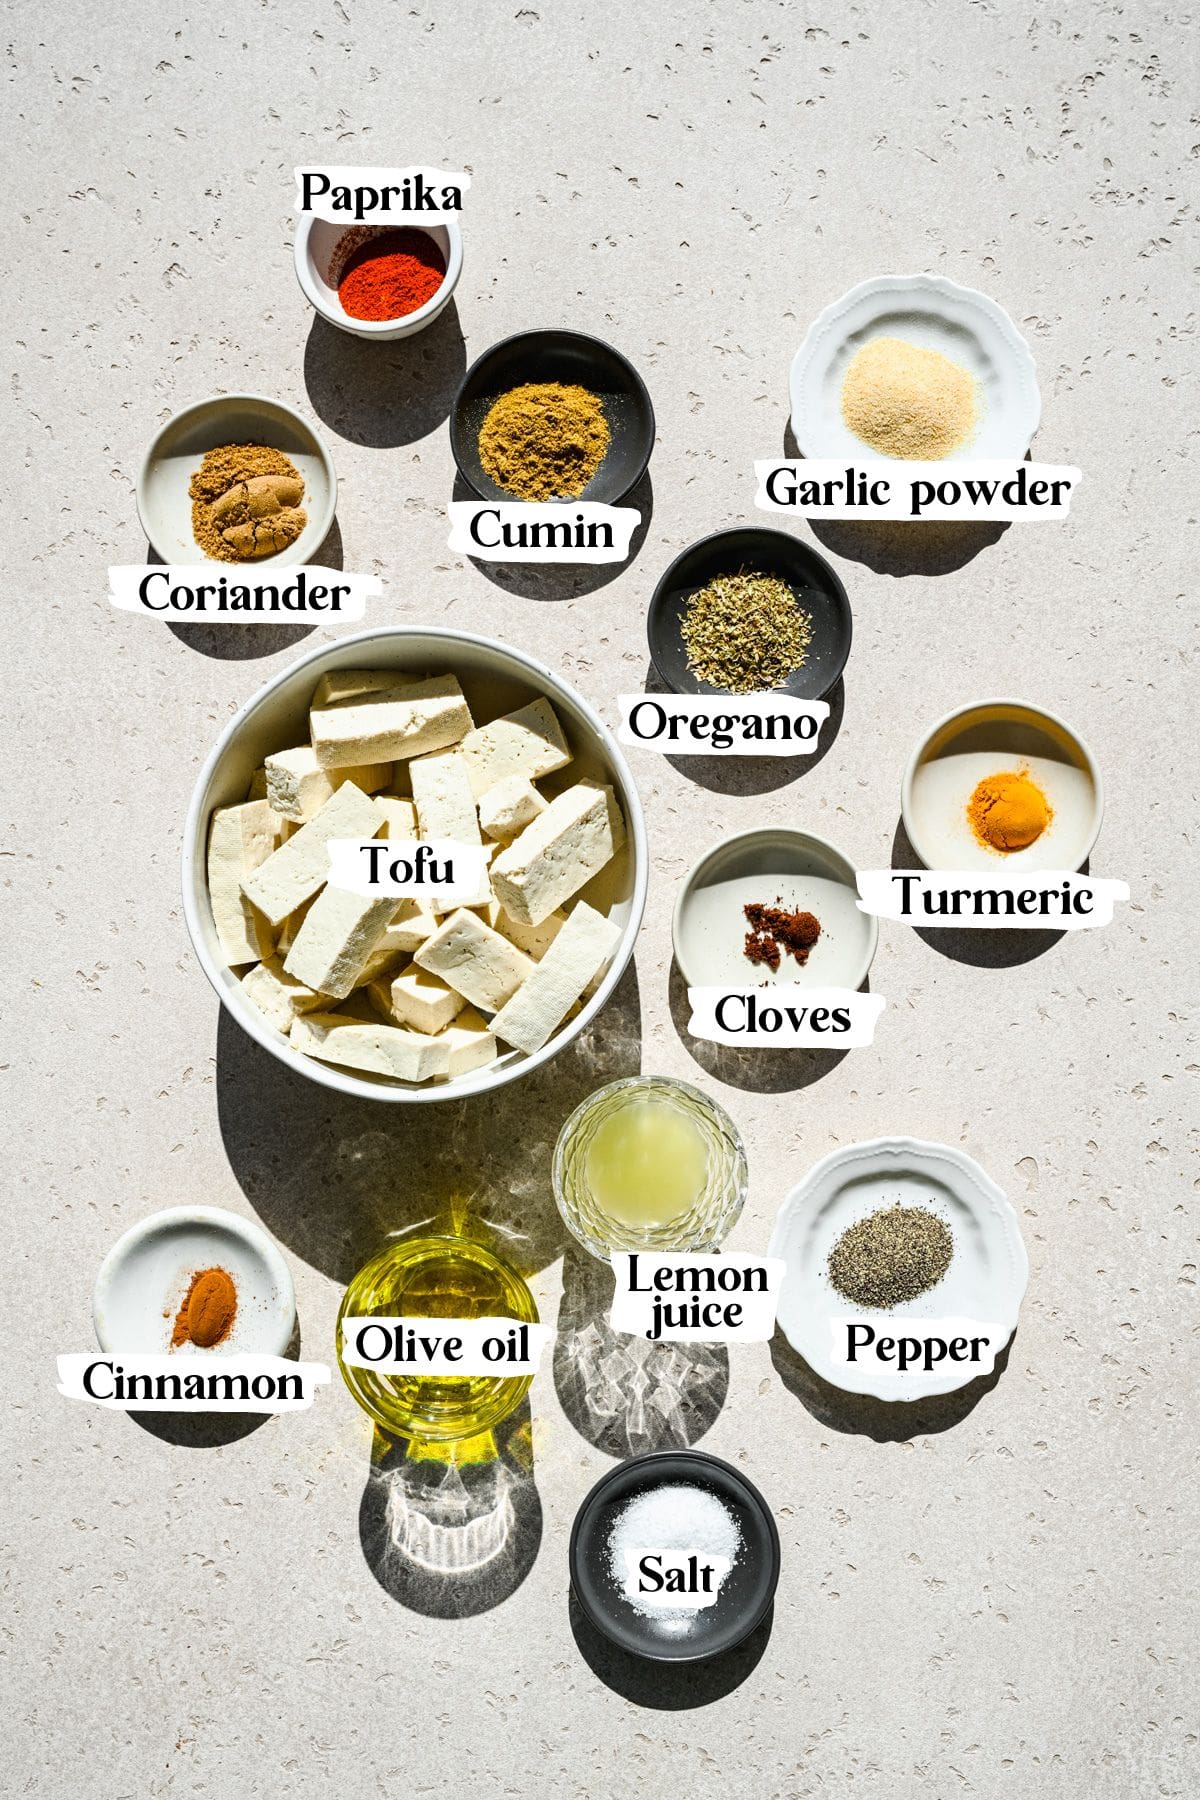 Vegan shawarma ingredients including tofu and olive oil.